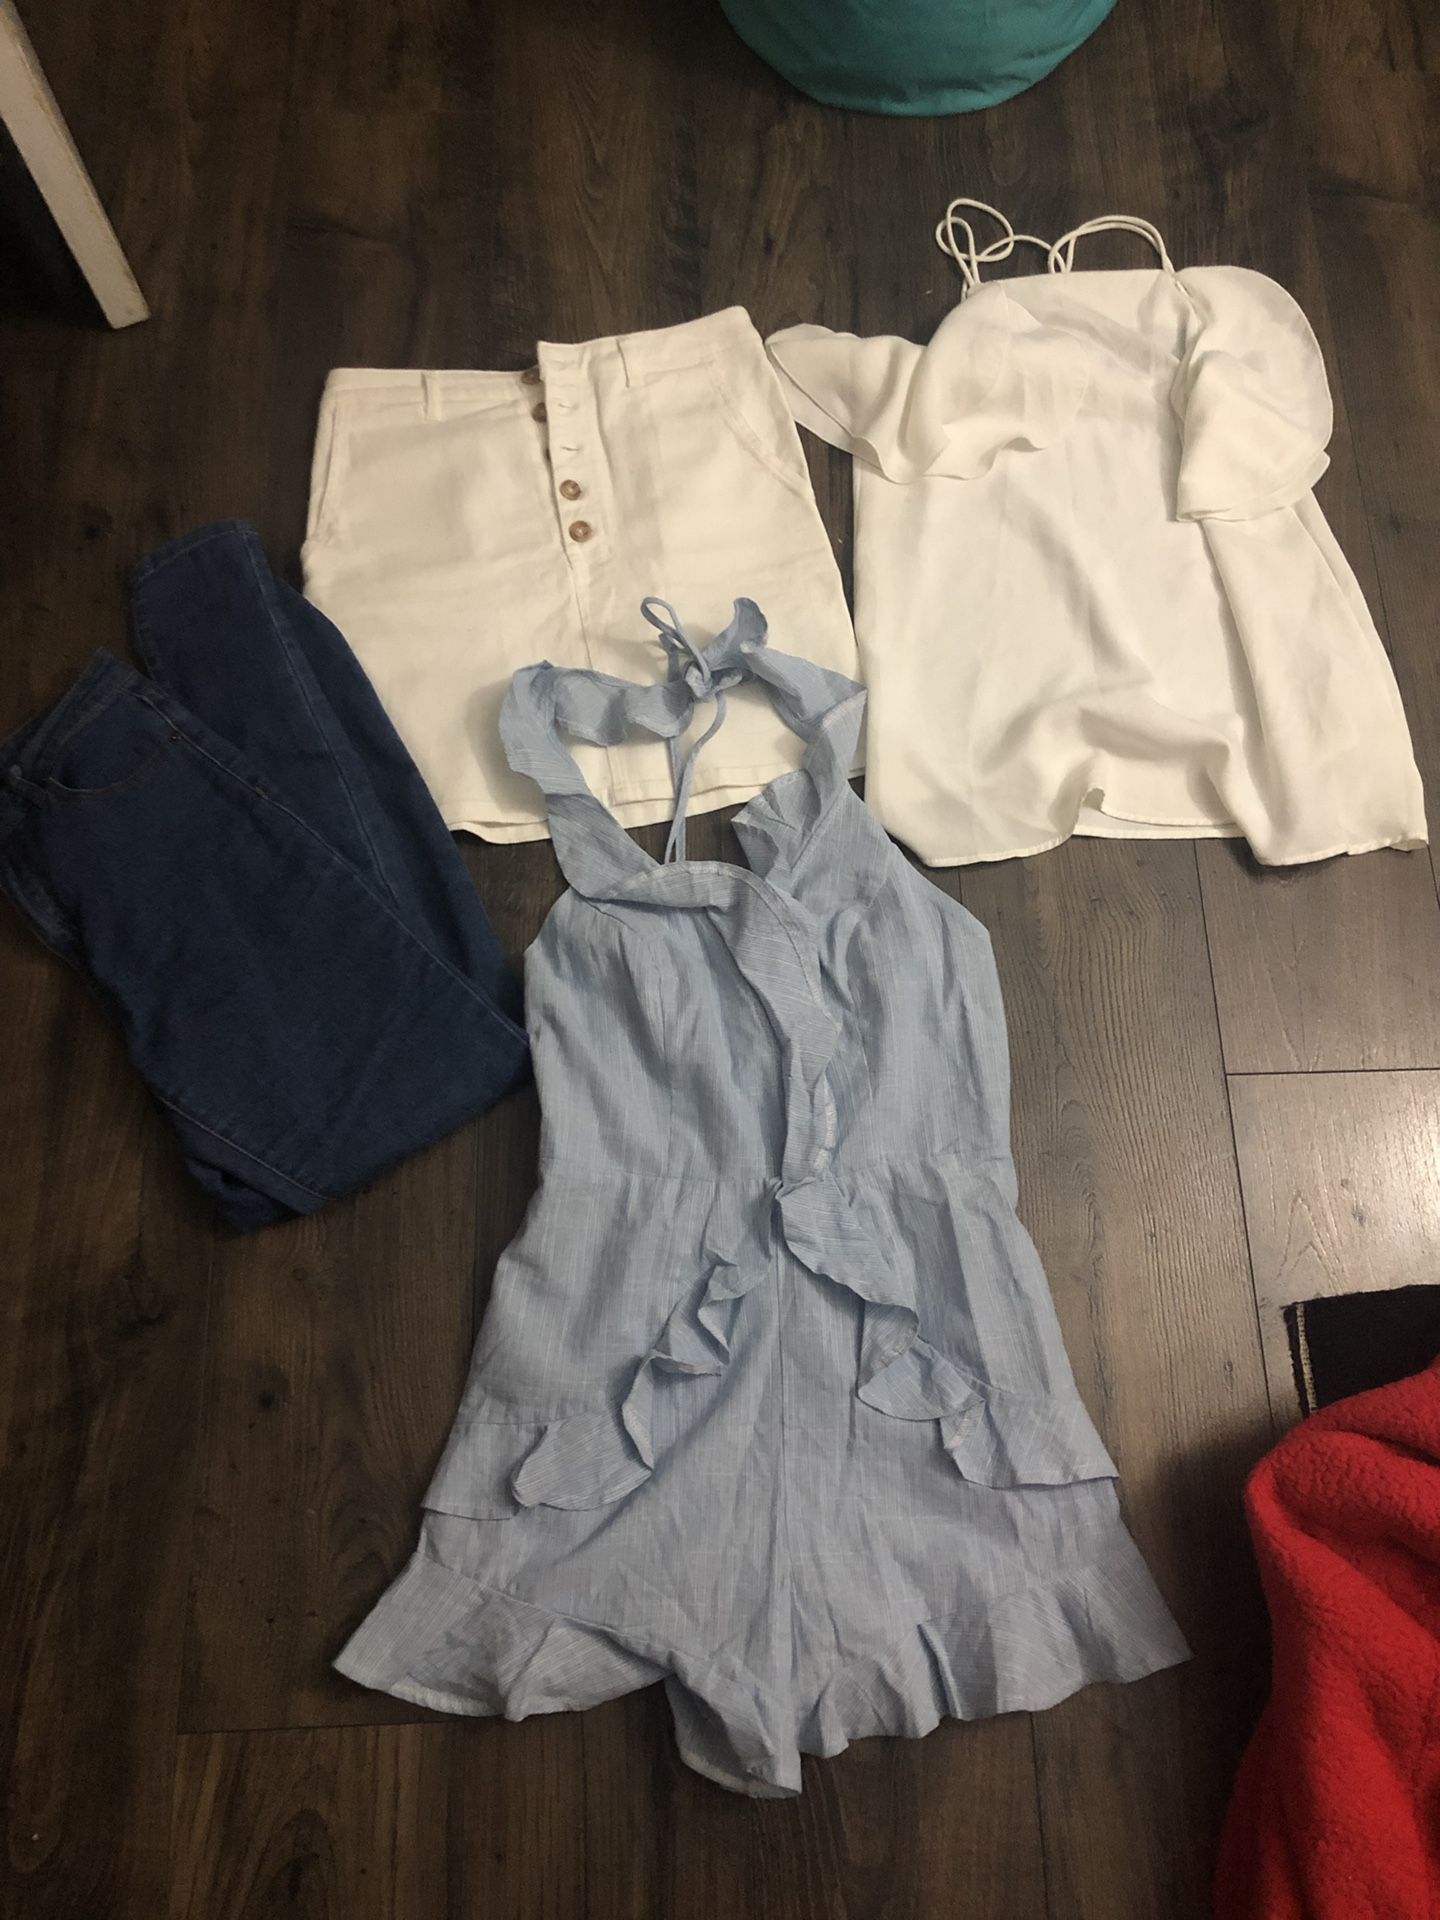 Clothing size small/medium